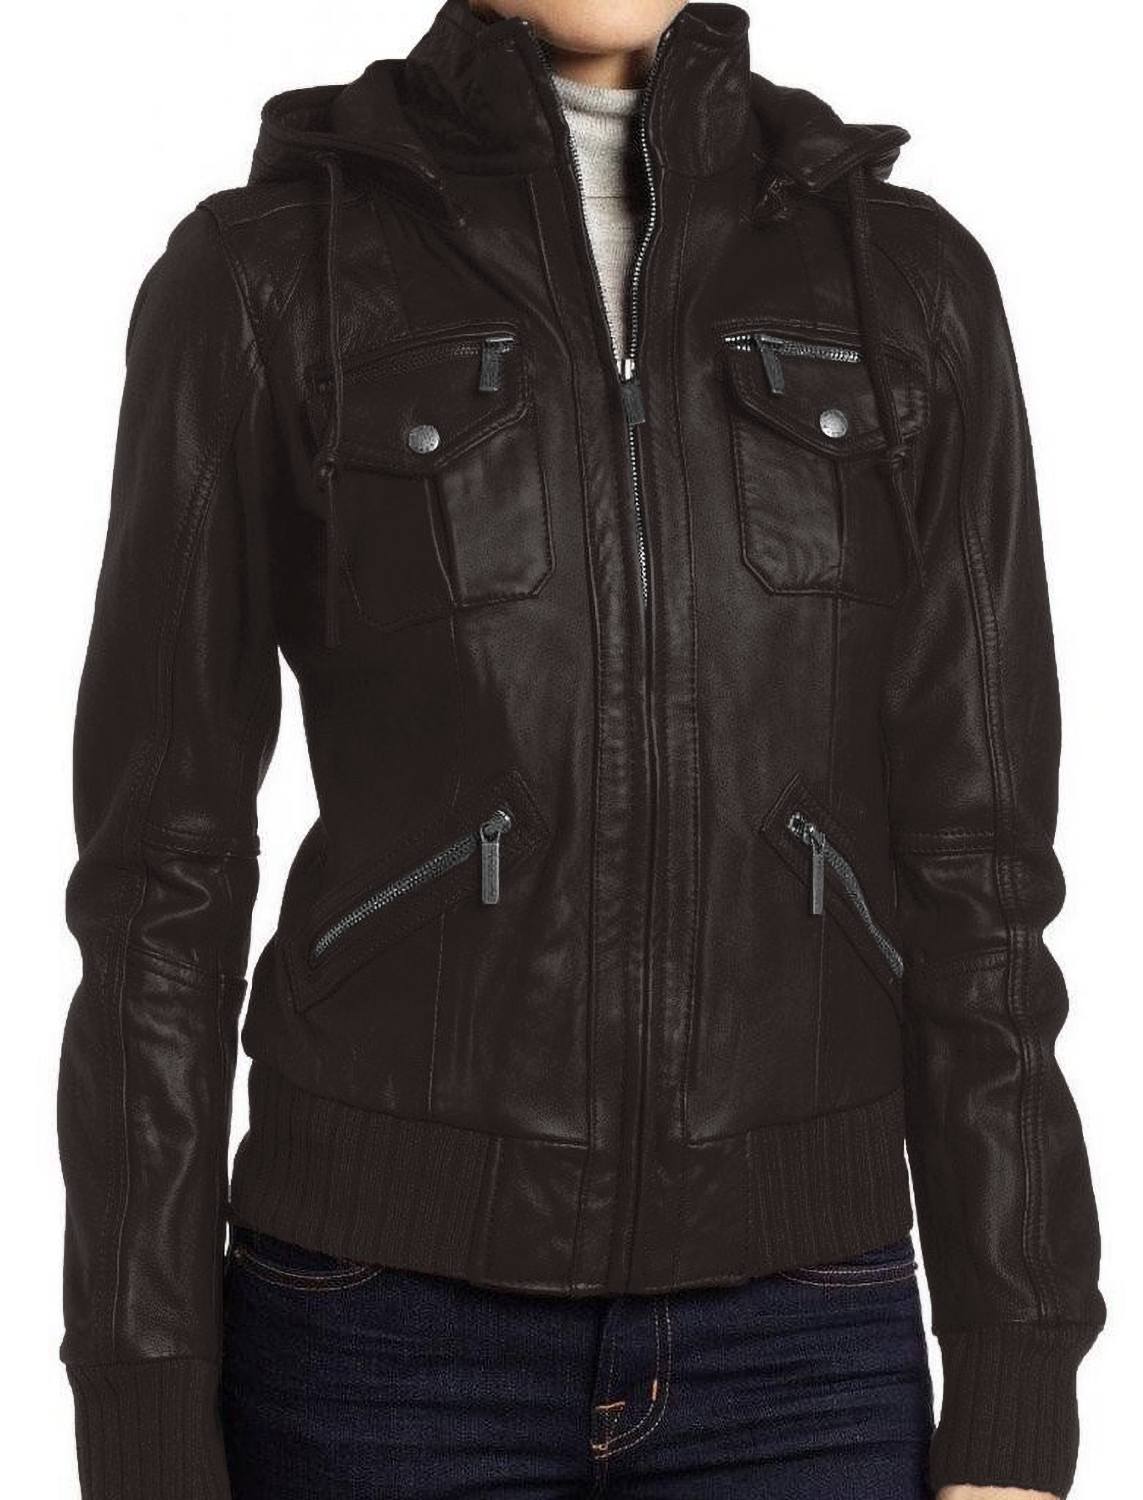 Leather Jackets Hub Mens Genuine Lambskin Leather Jacket (Black, Regal Jacket) - 1501270